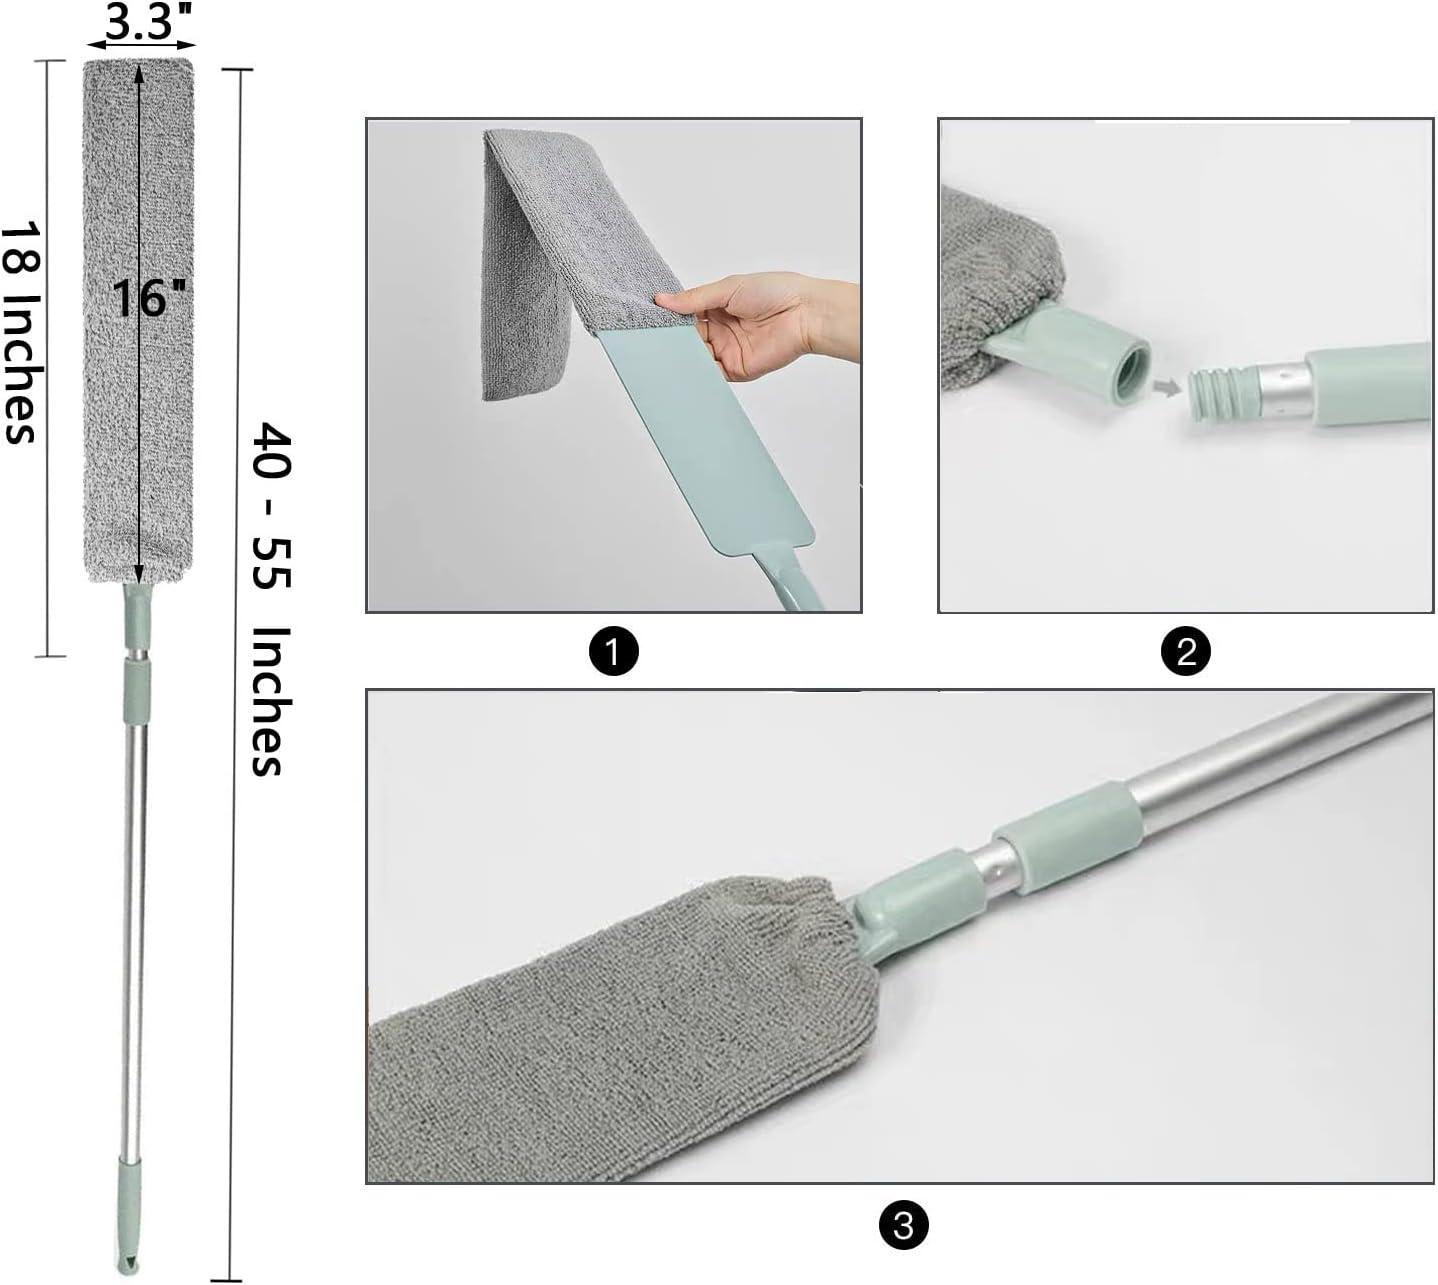 Gap Dust Cleaner Retractable Microfiber Gap Dust Brush Flexible Long Flat  Gap Duster with Extendable Pole